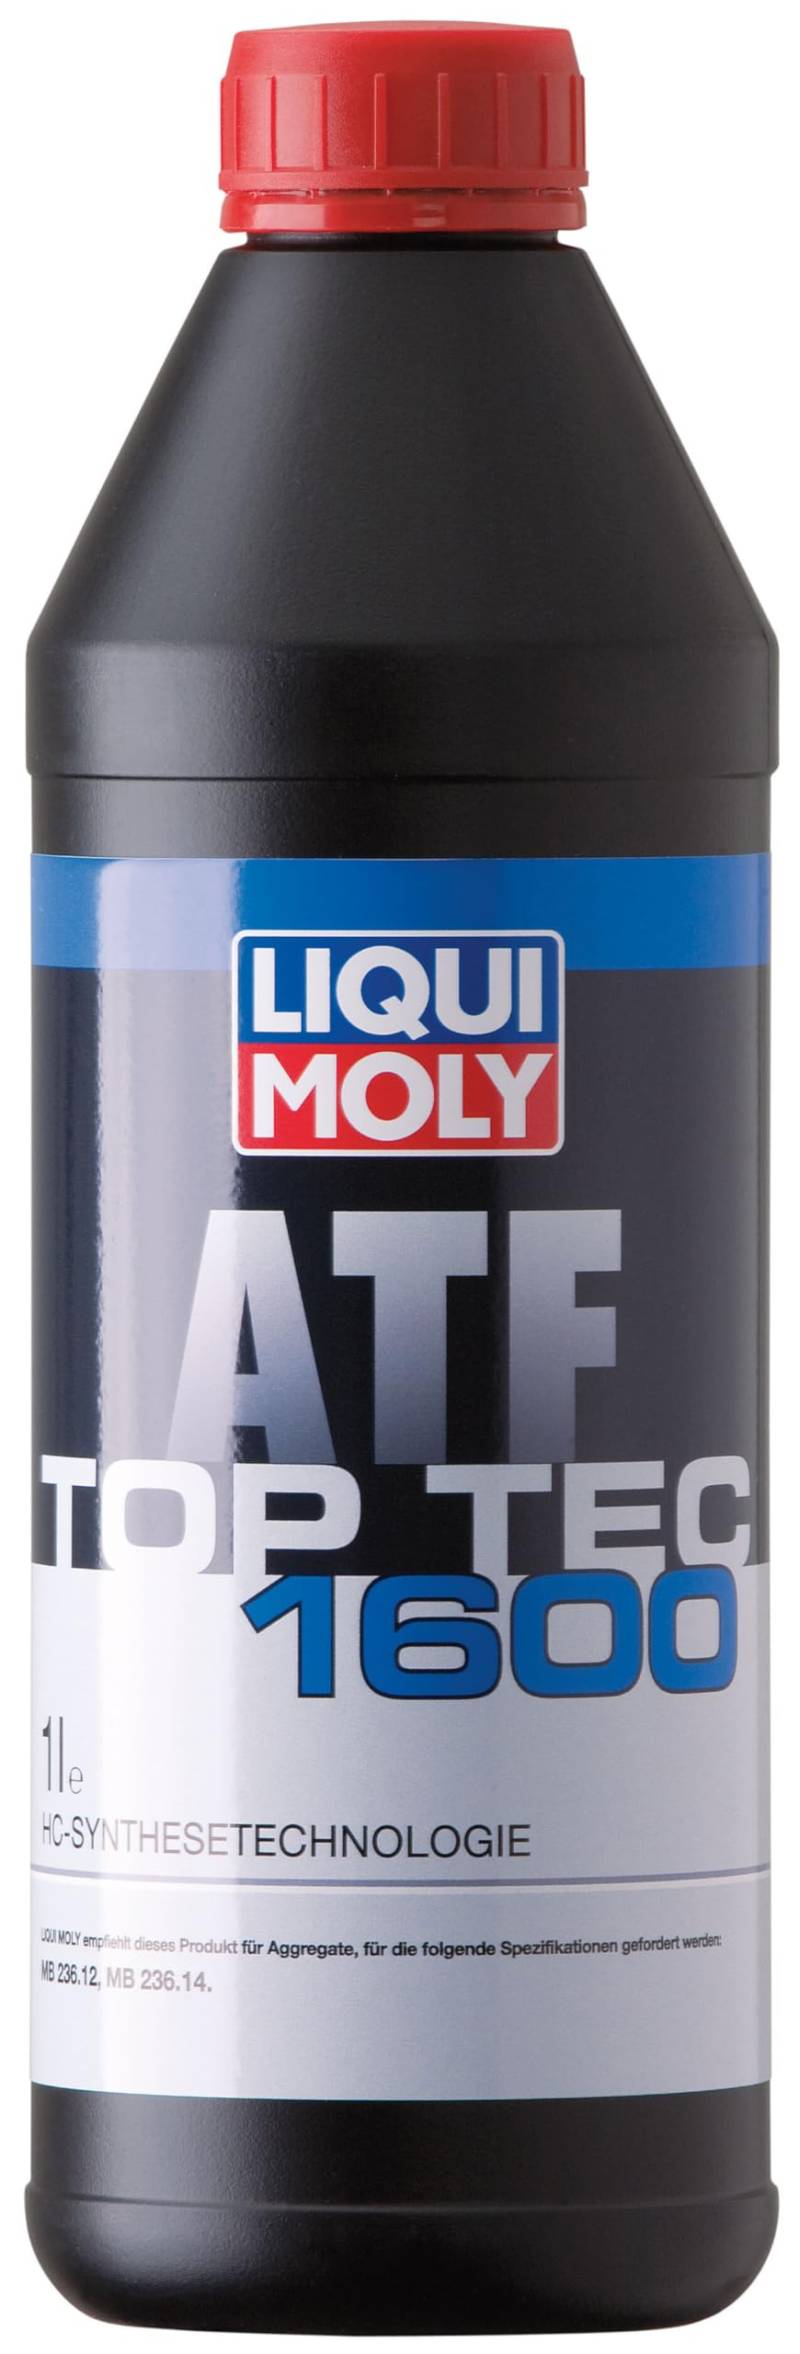 LIQUI MOLY Top Tec ATF 1600 | 1 L | Getriebeöl | Hydrauliköl | Art.-Nr.: 3659 von Liqui Moly